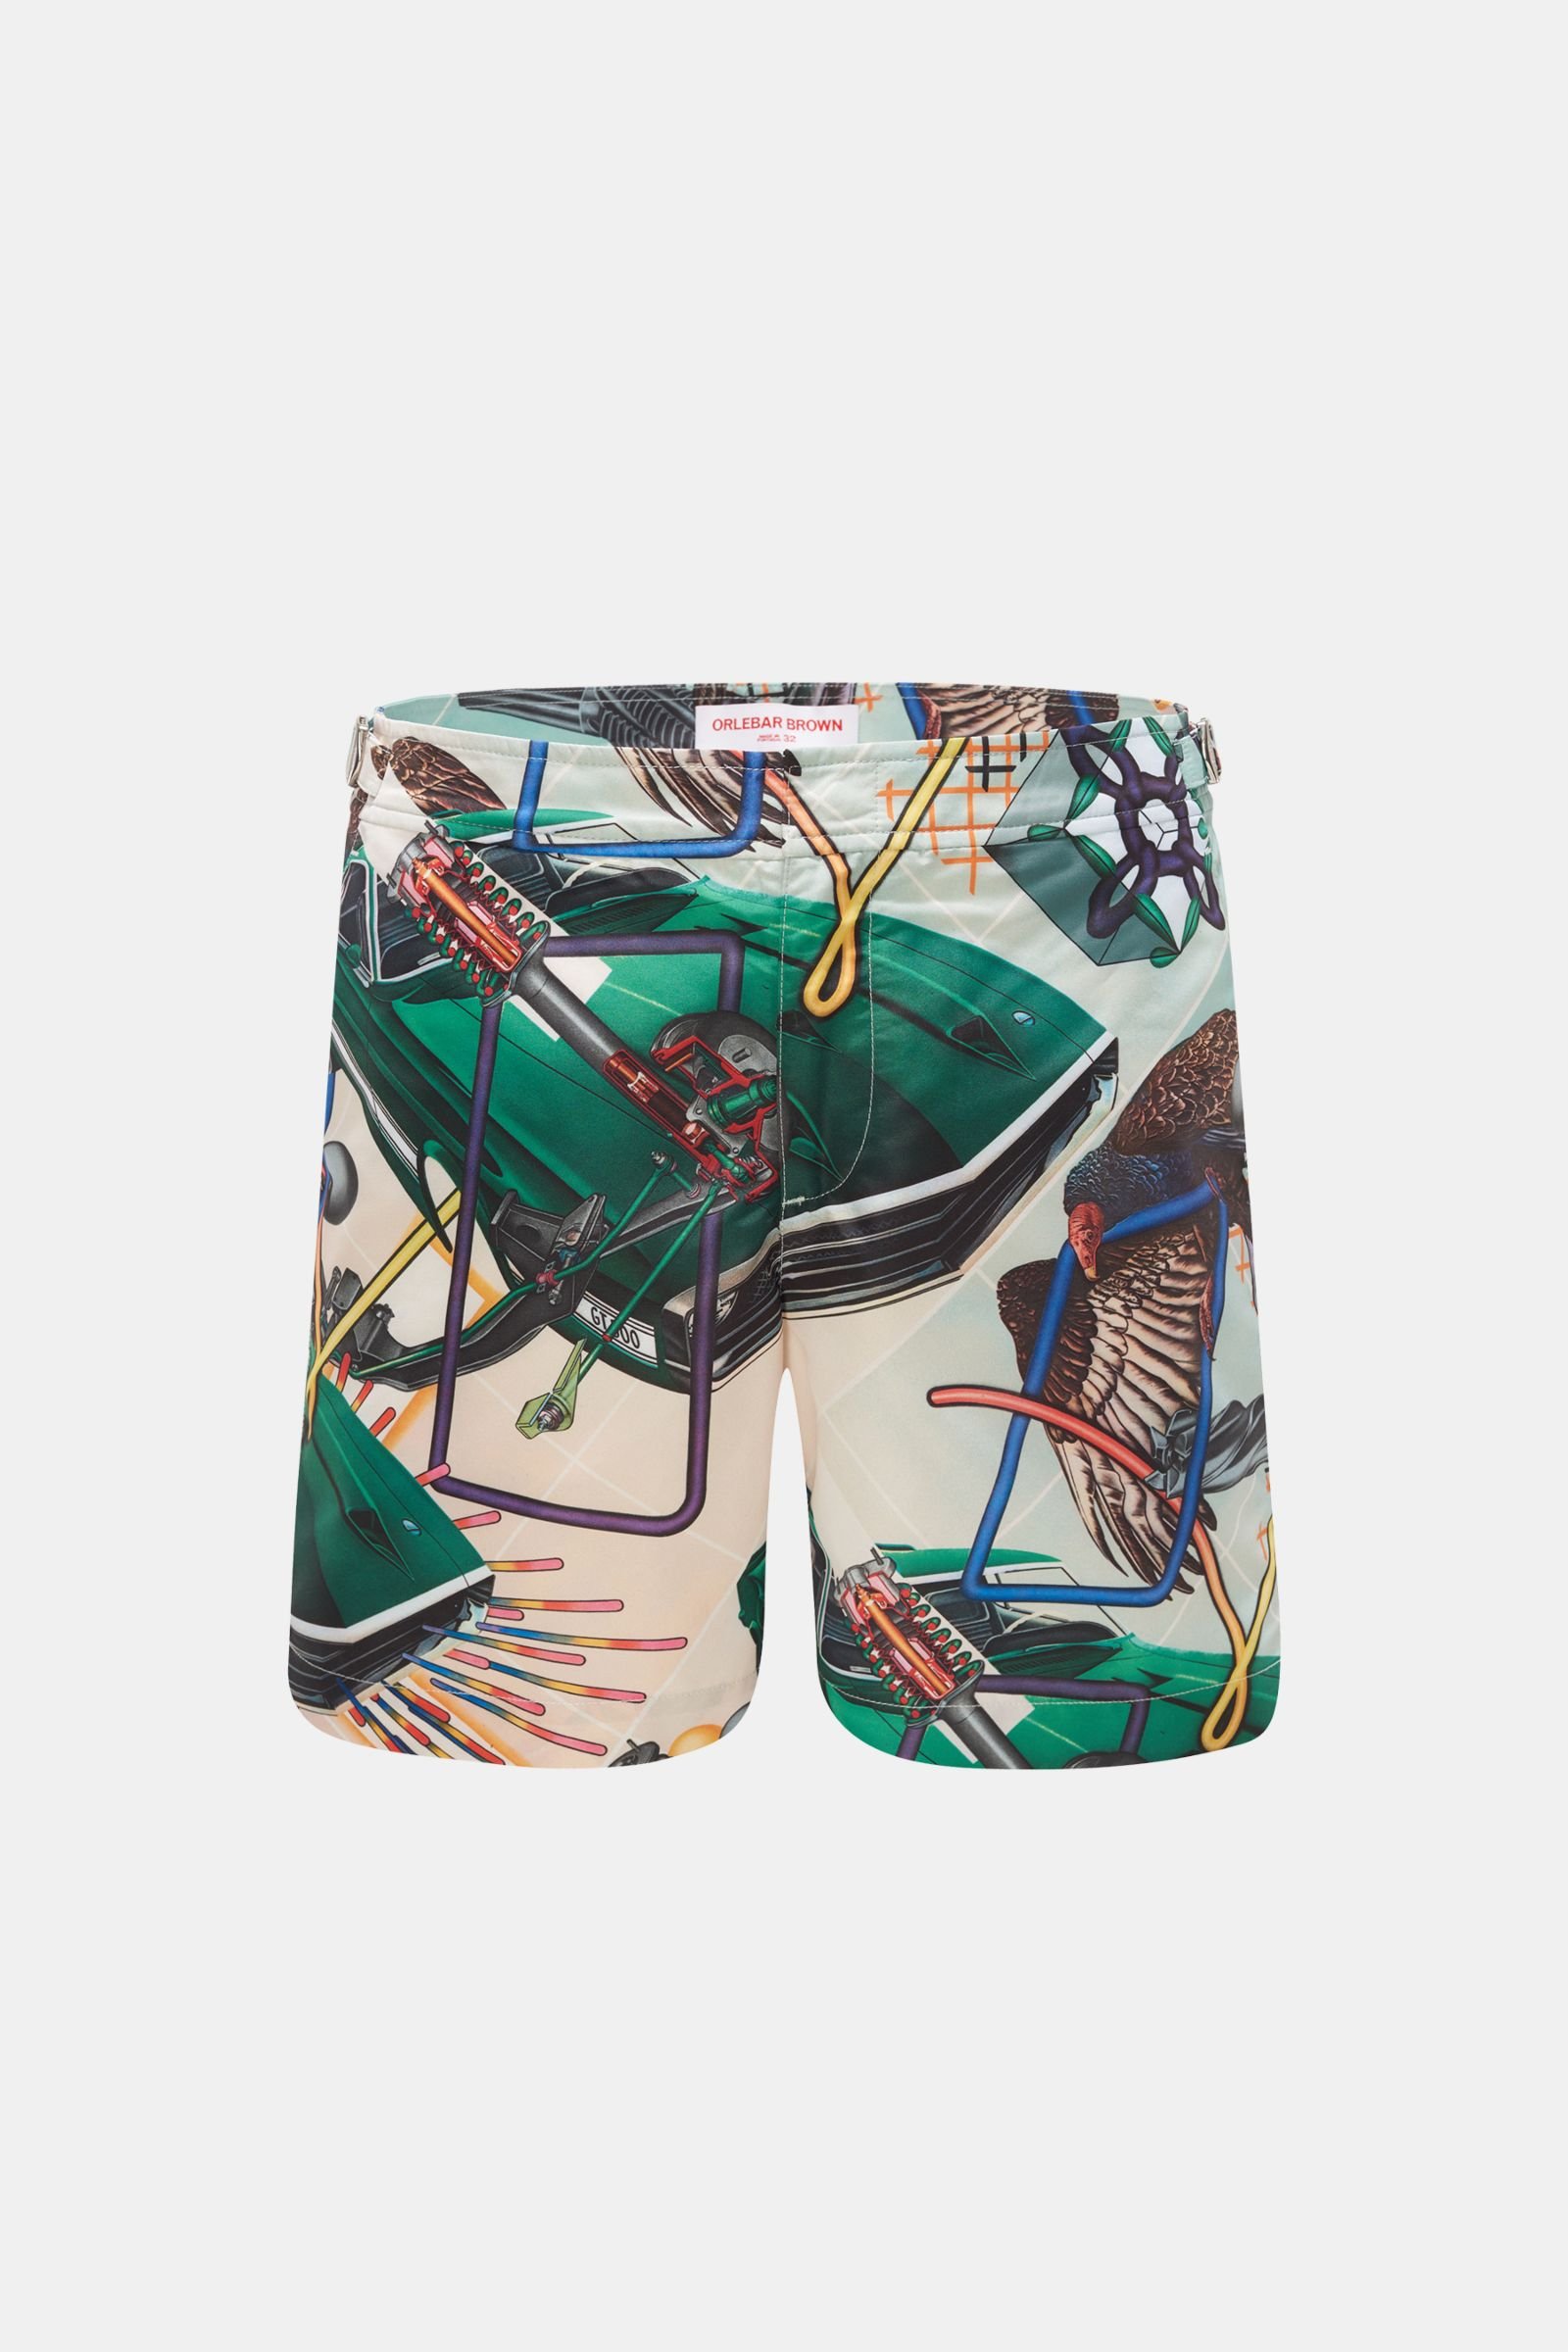 Swim shorts 'Bulldog Front Axle' green/beige patterned